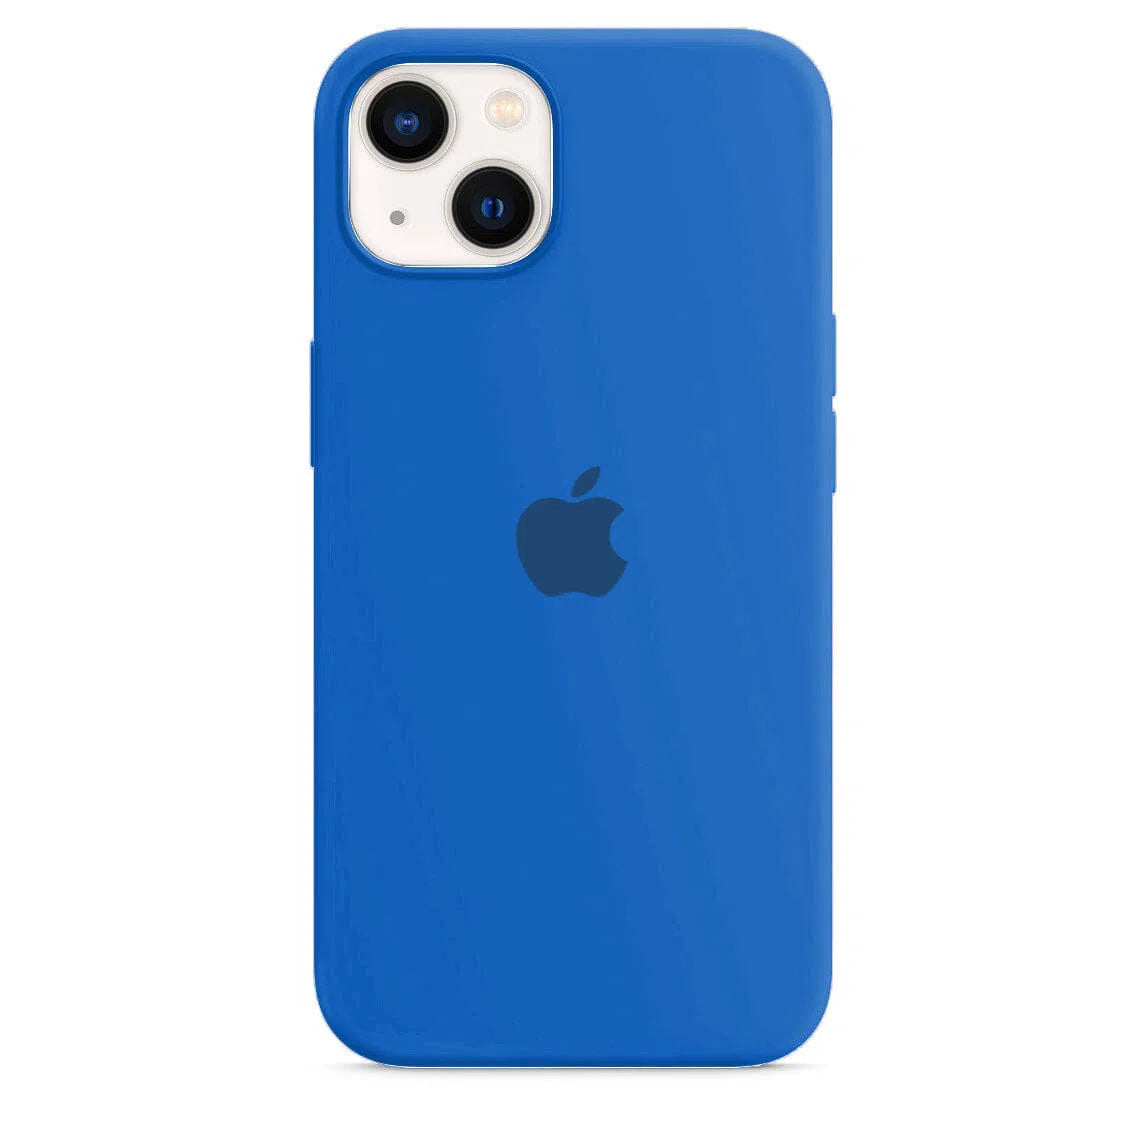 Husa iPhone Silicone Case Blue Cobalt (Albastru) Anca's Store 13 mini 